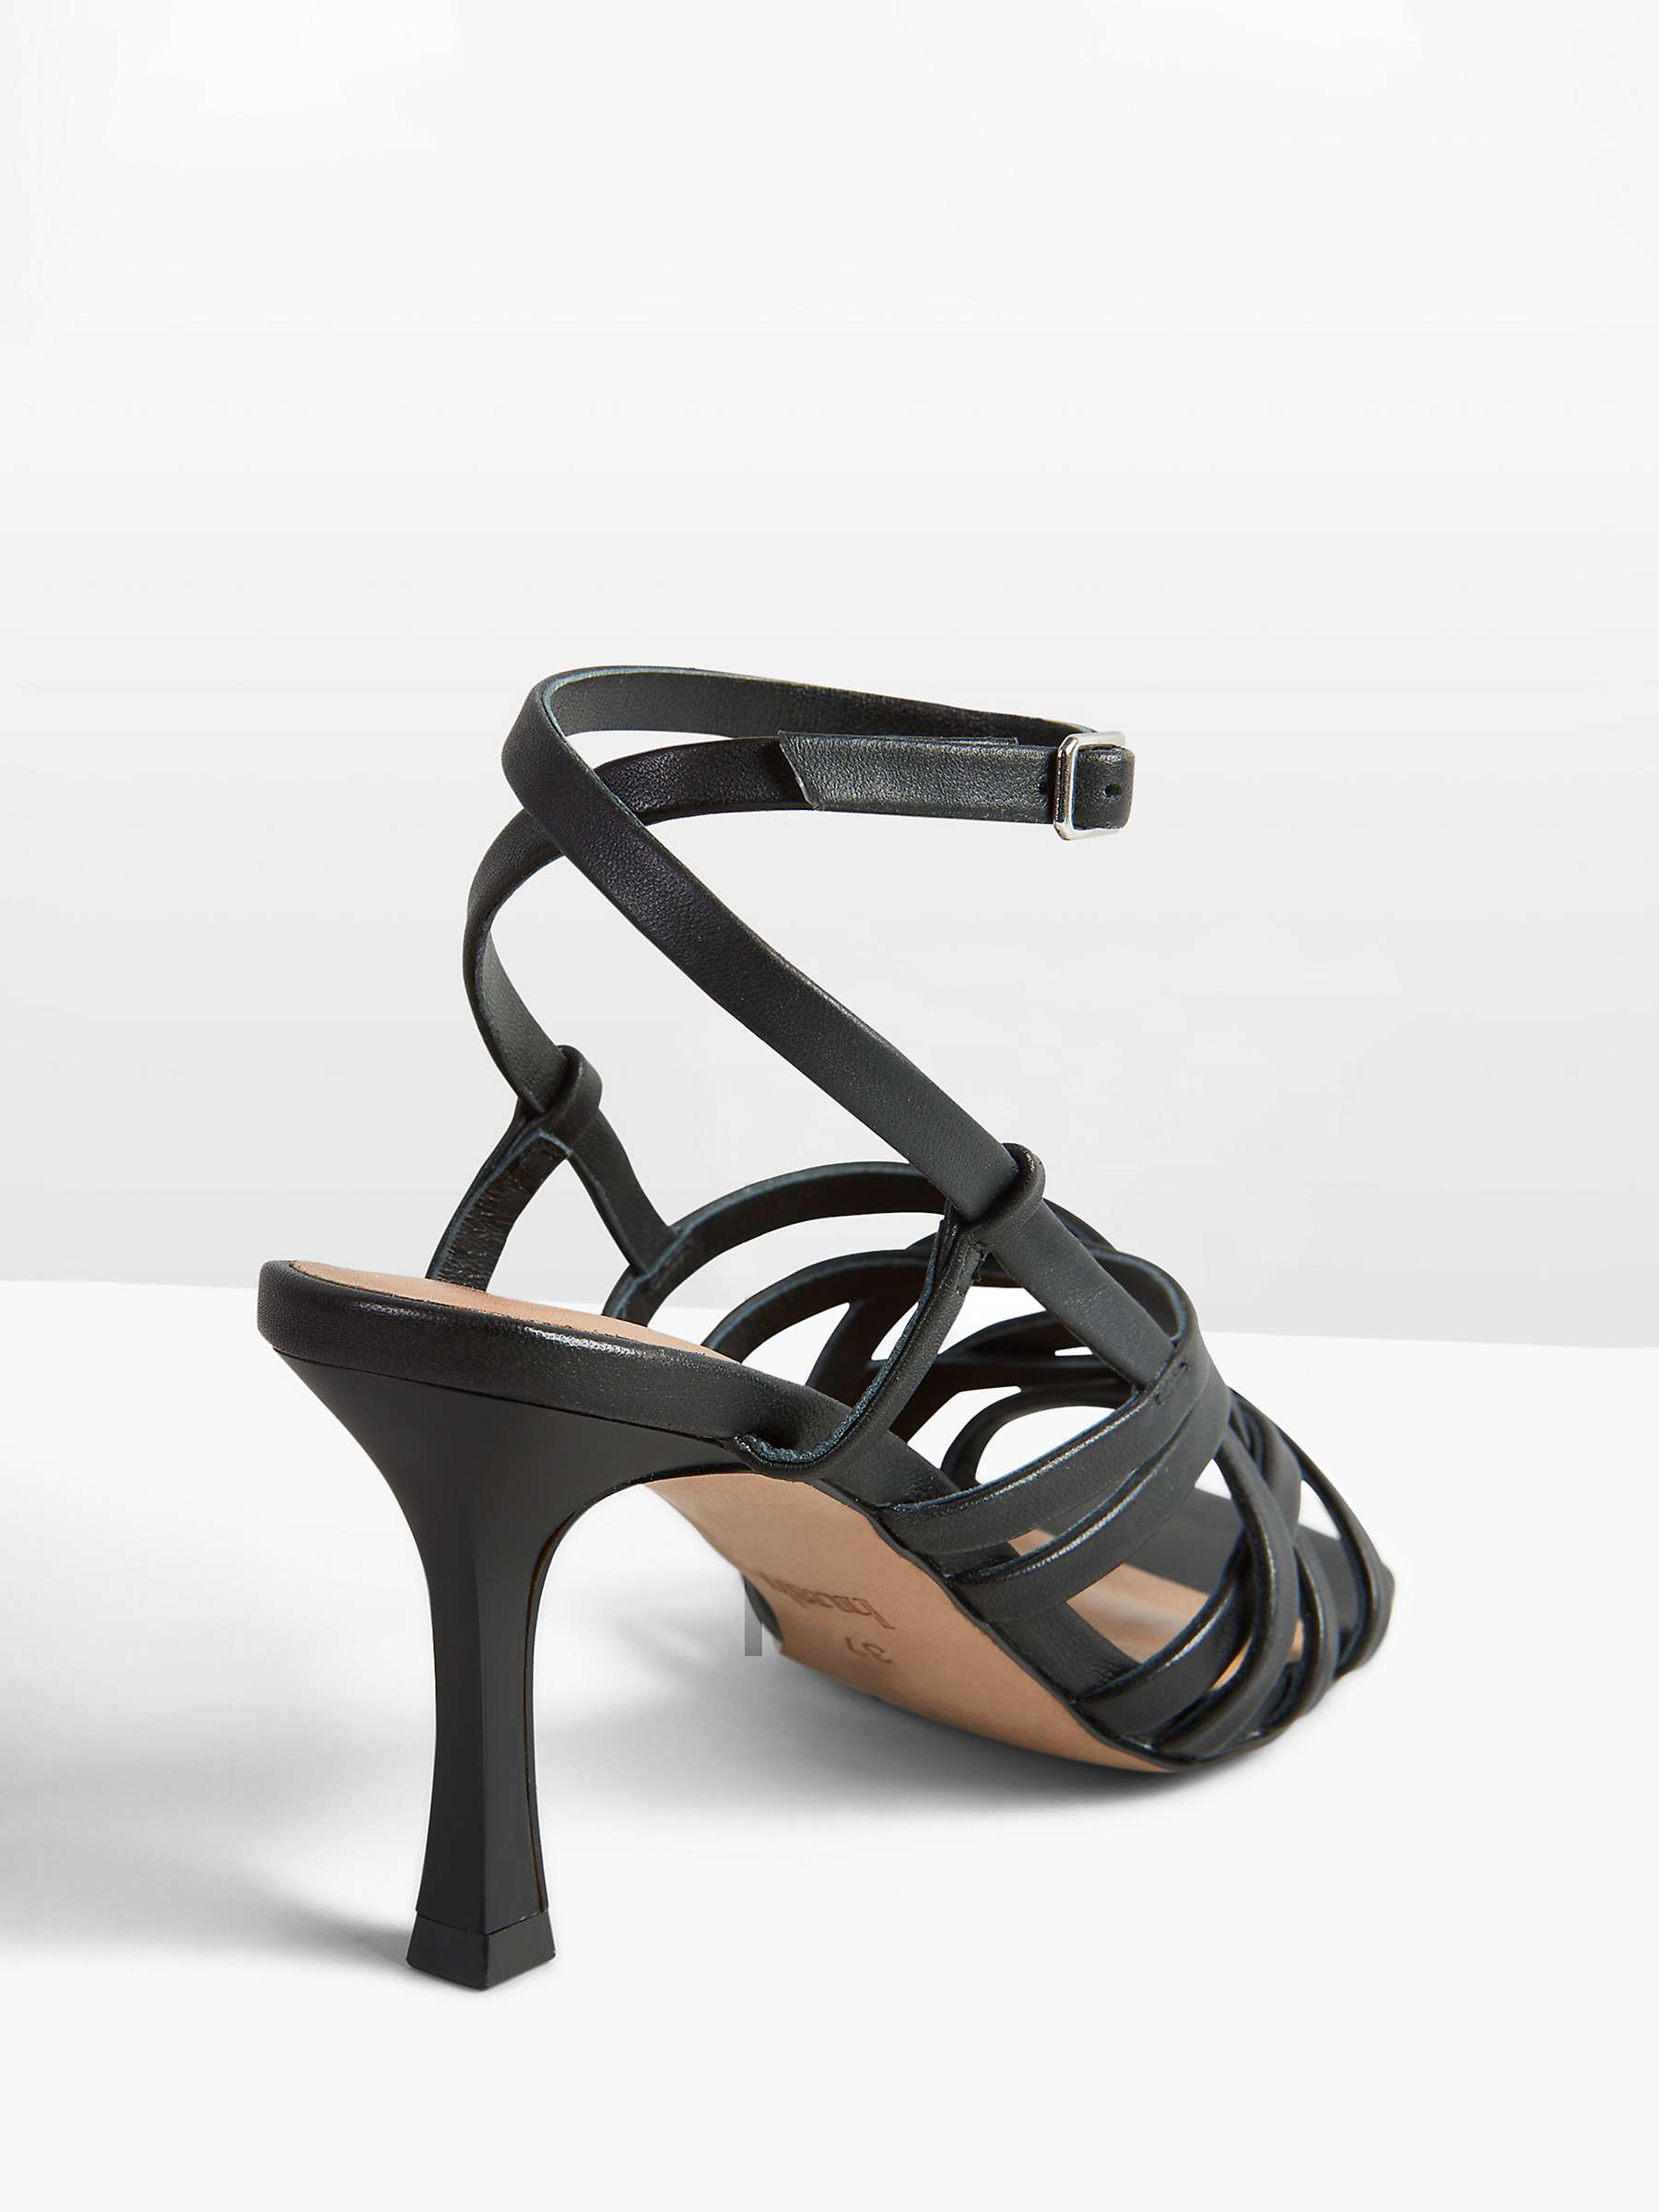 HUSH Gisele Stiletto Heel Leather Sandals, Black at John Lewis & Partners